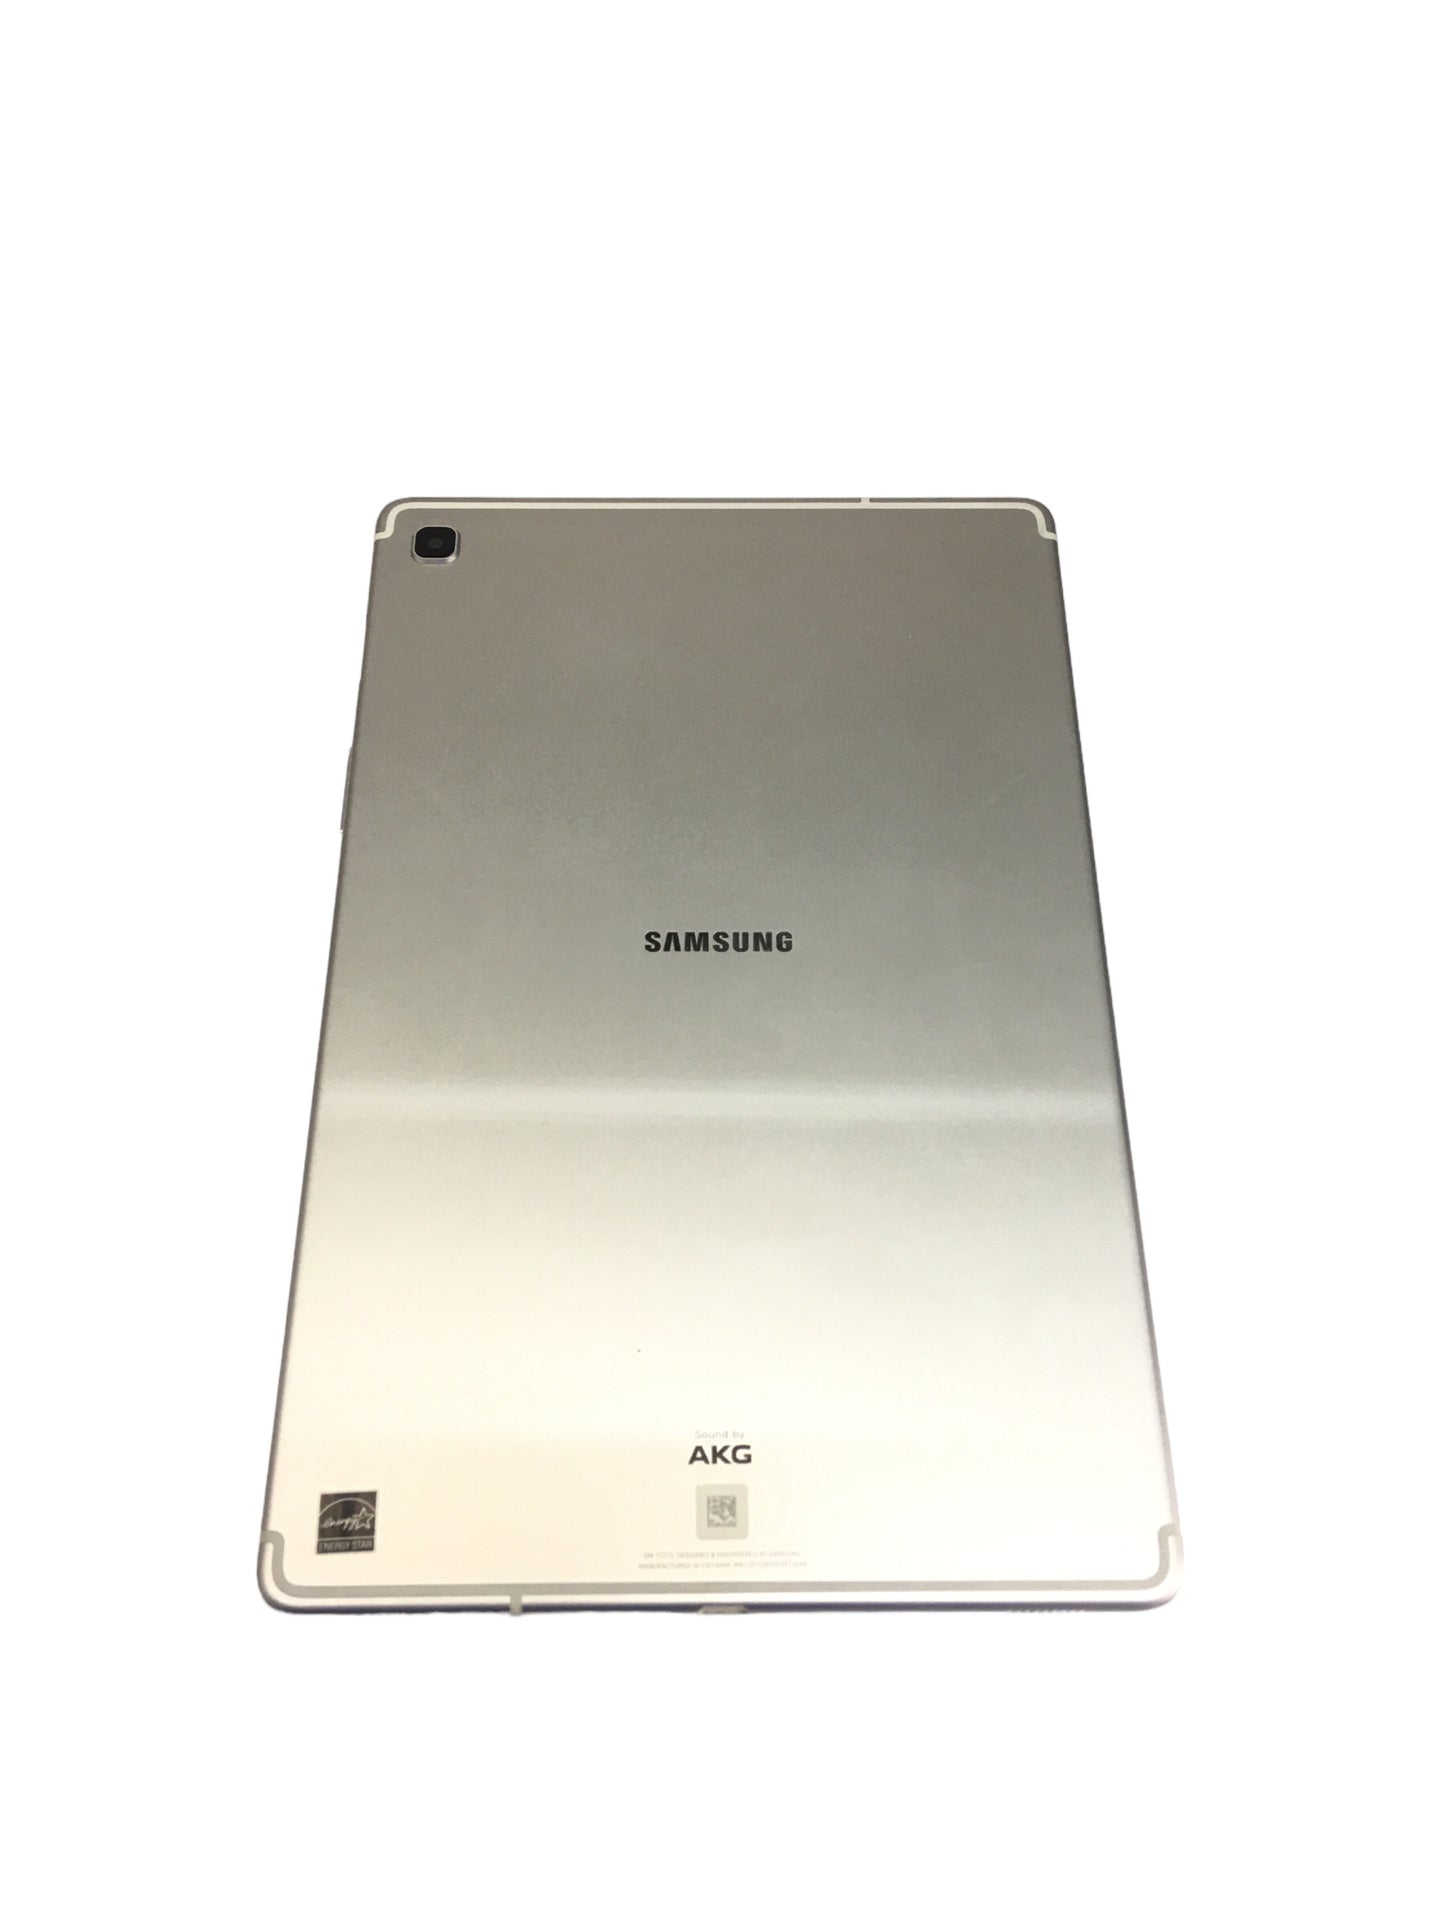 Samsung Galaxy Tab S5e SM-T727V 64GB 10.5 Inches